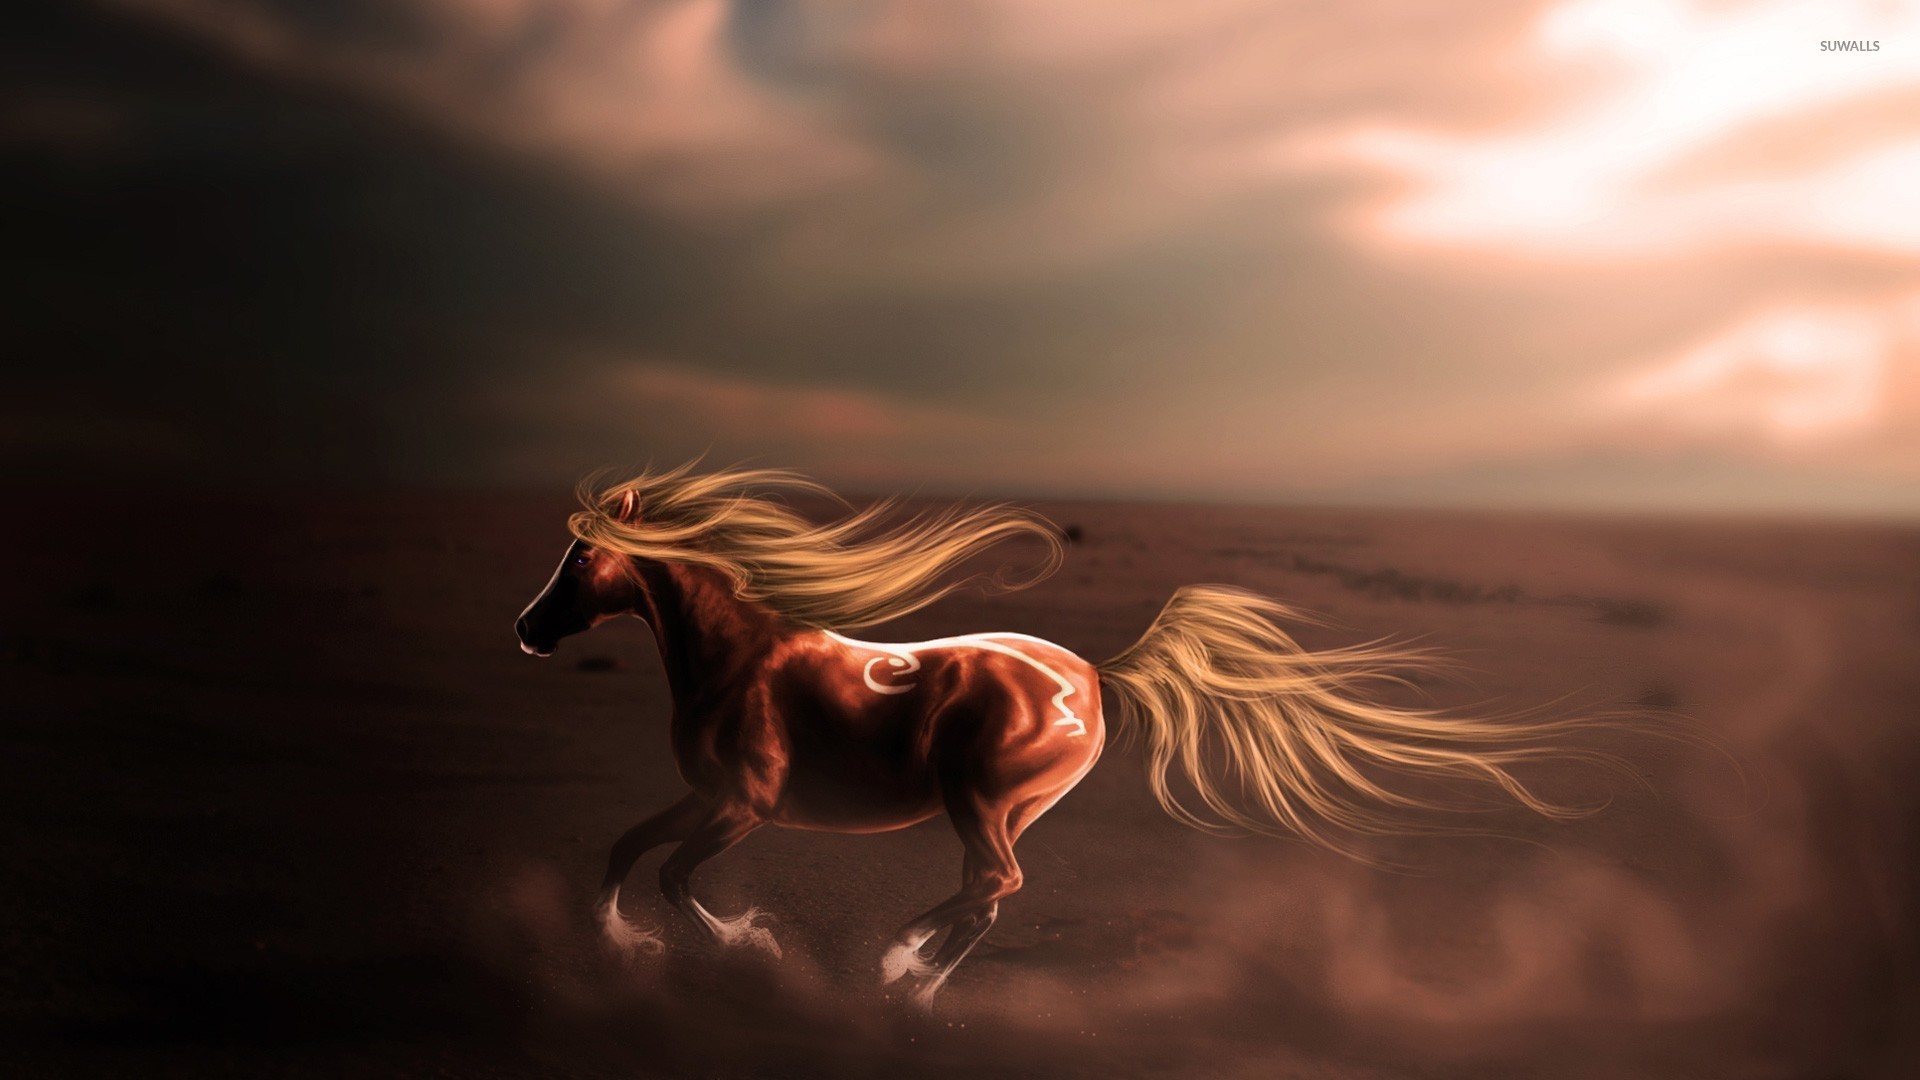 1920x1080 Majestic horse in the desert wallpaper - Fantasy .